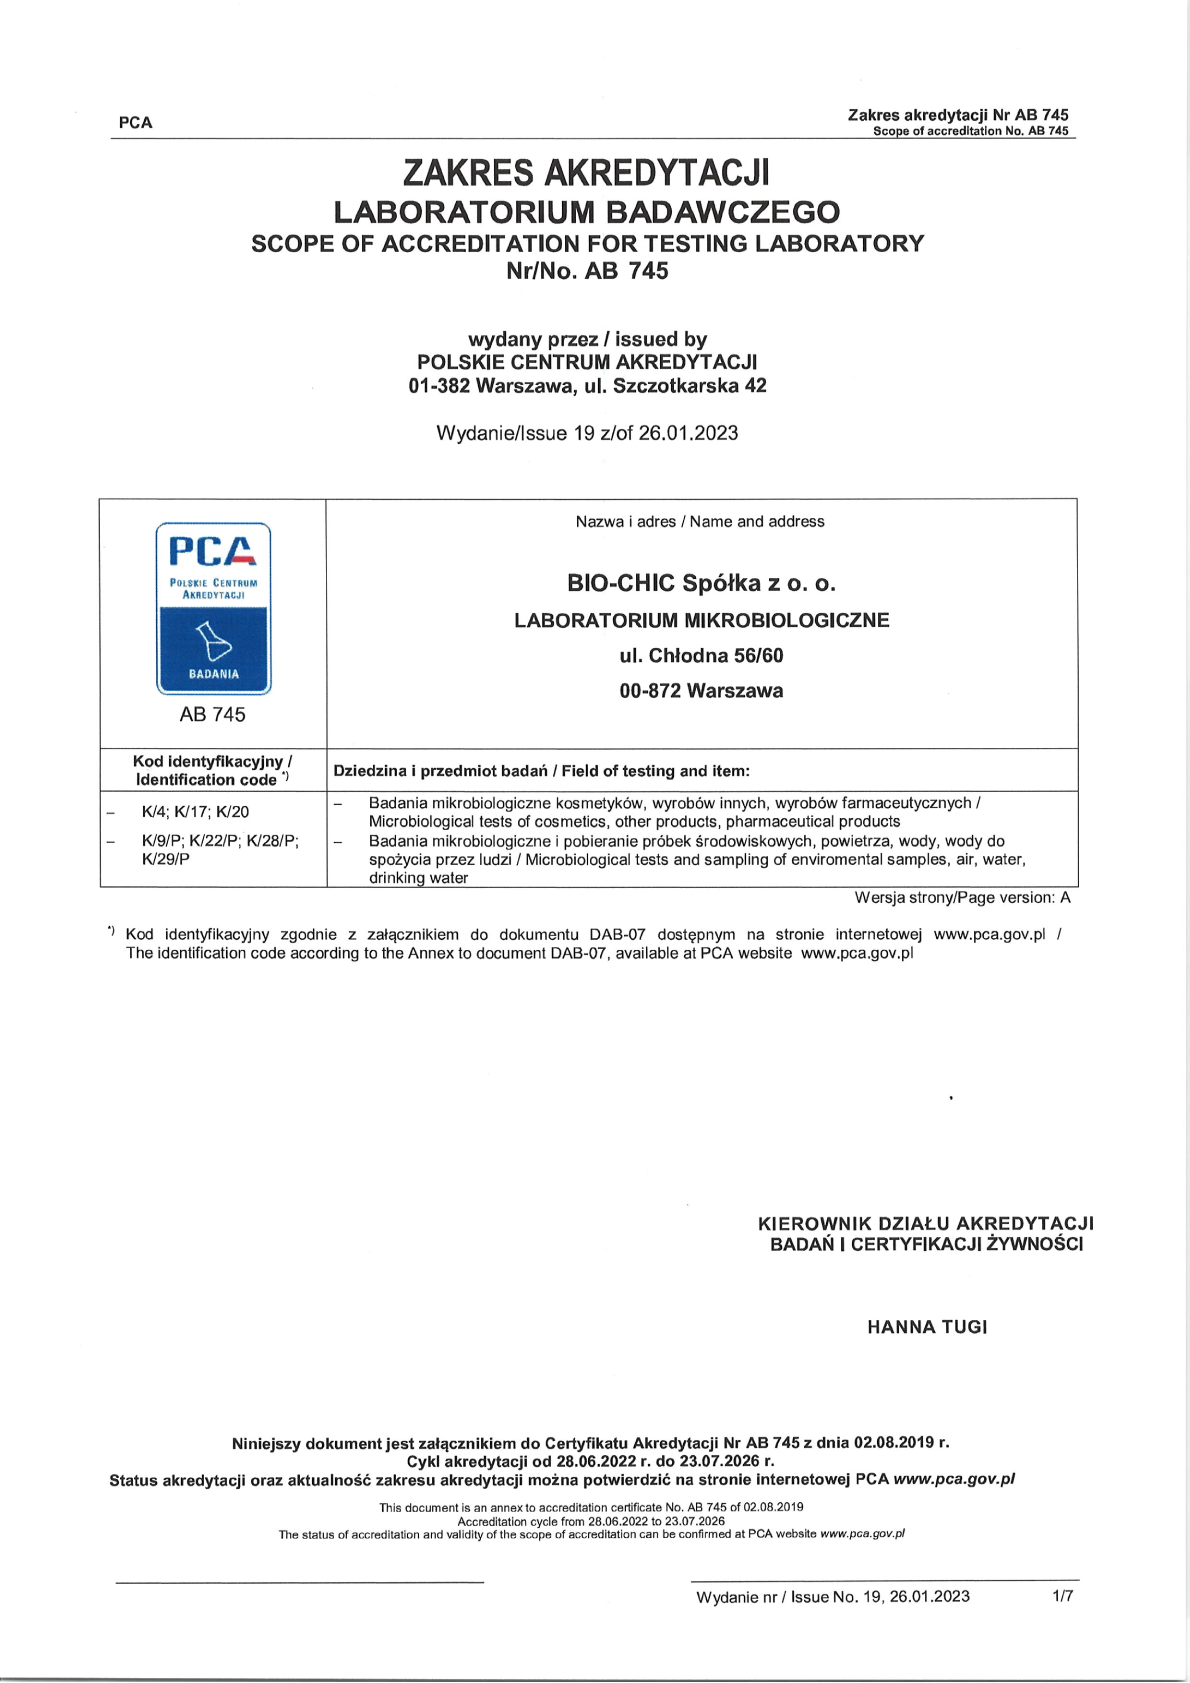 Zakres akredytacji PCA